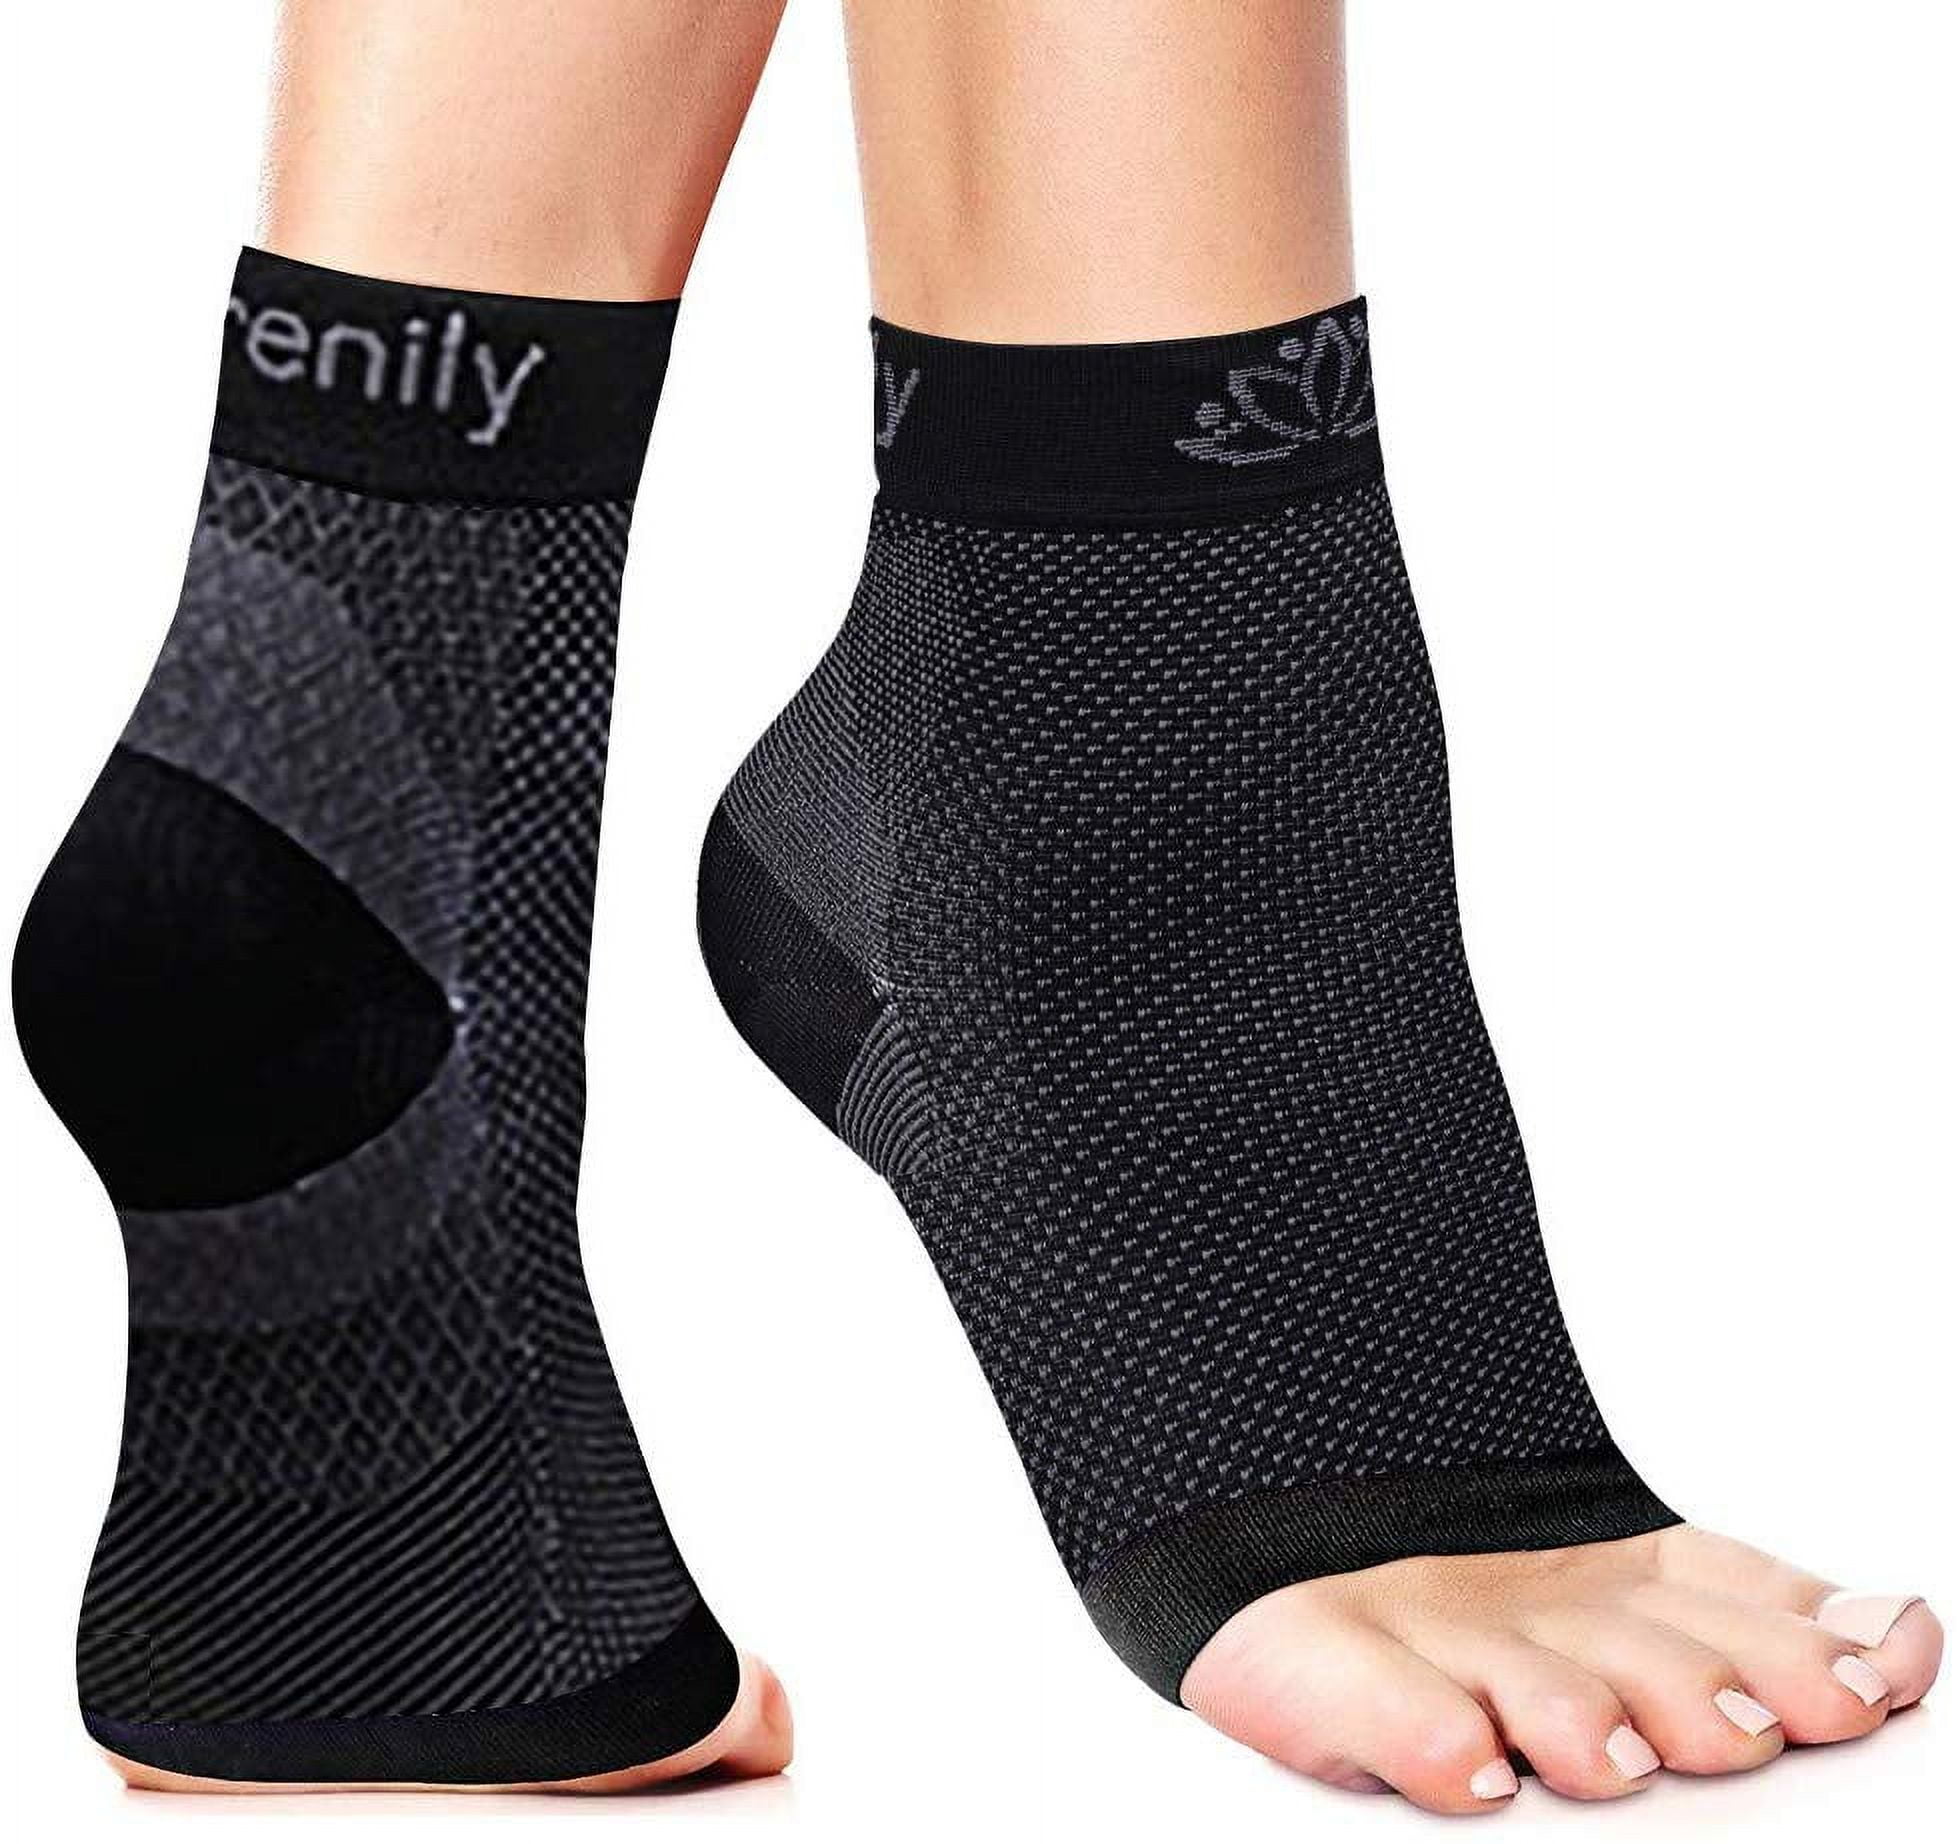 Serenily Plantar Faciitis Socks - Toeless Socks for Foot Pain & Plantar ...